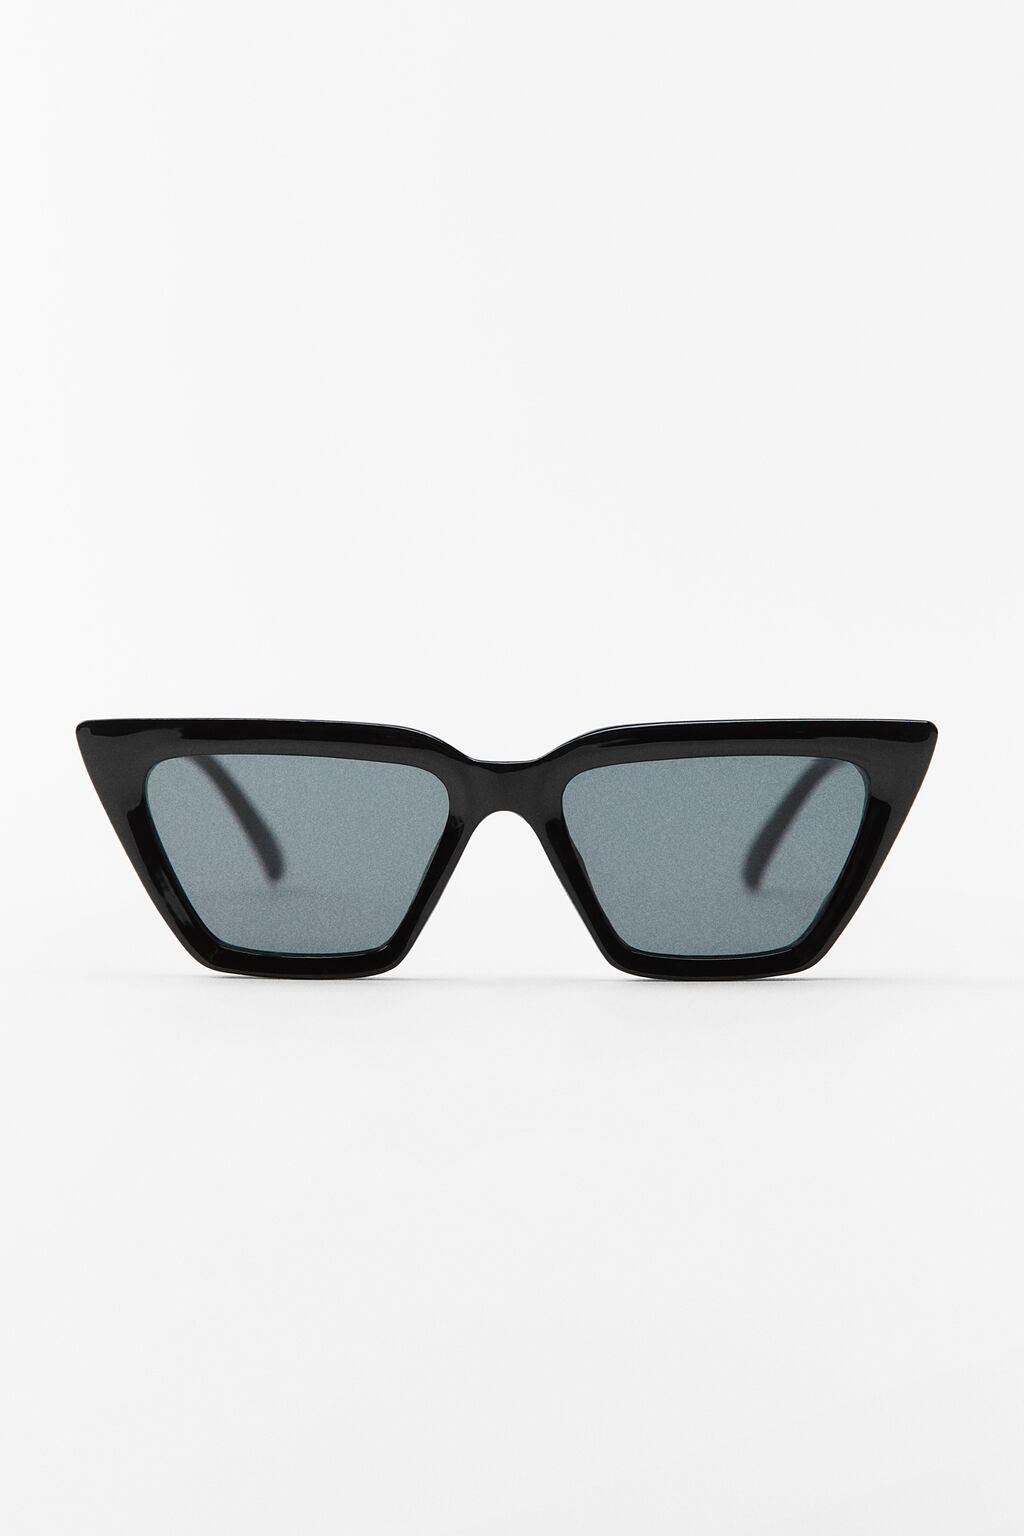 Cat-eye Sunglasses, Zara